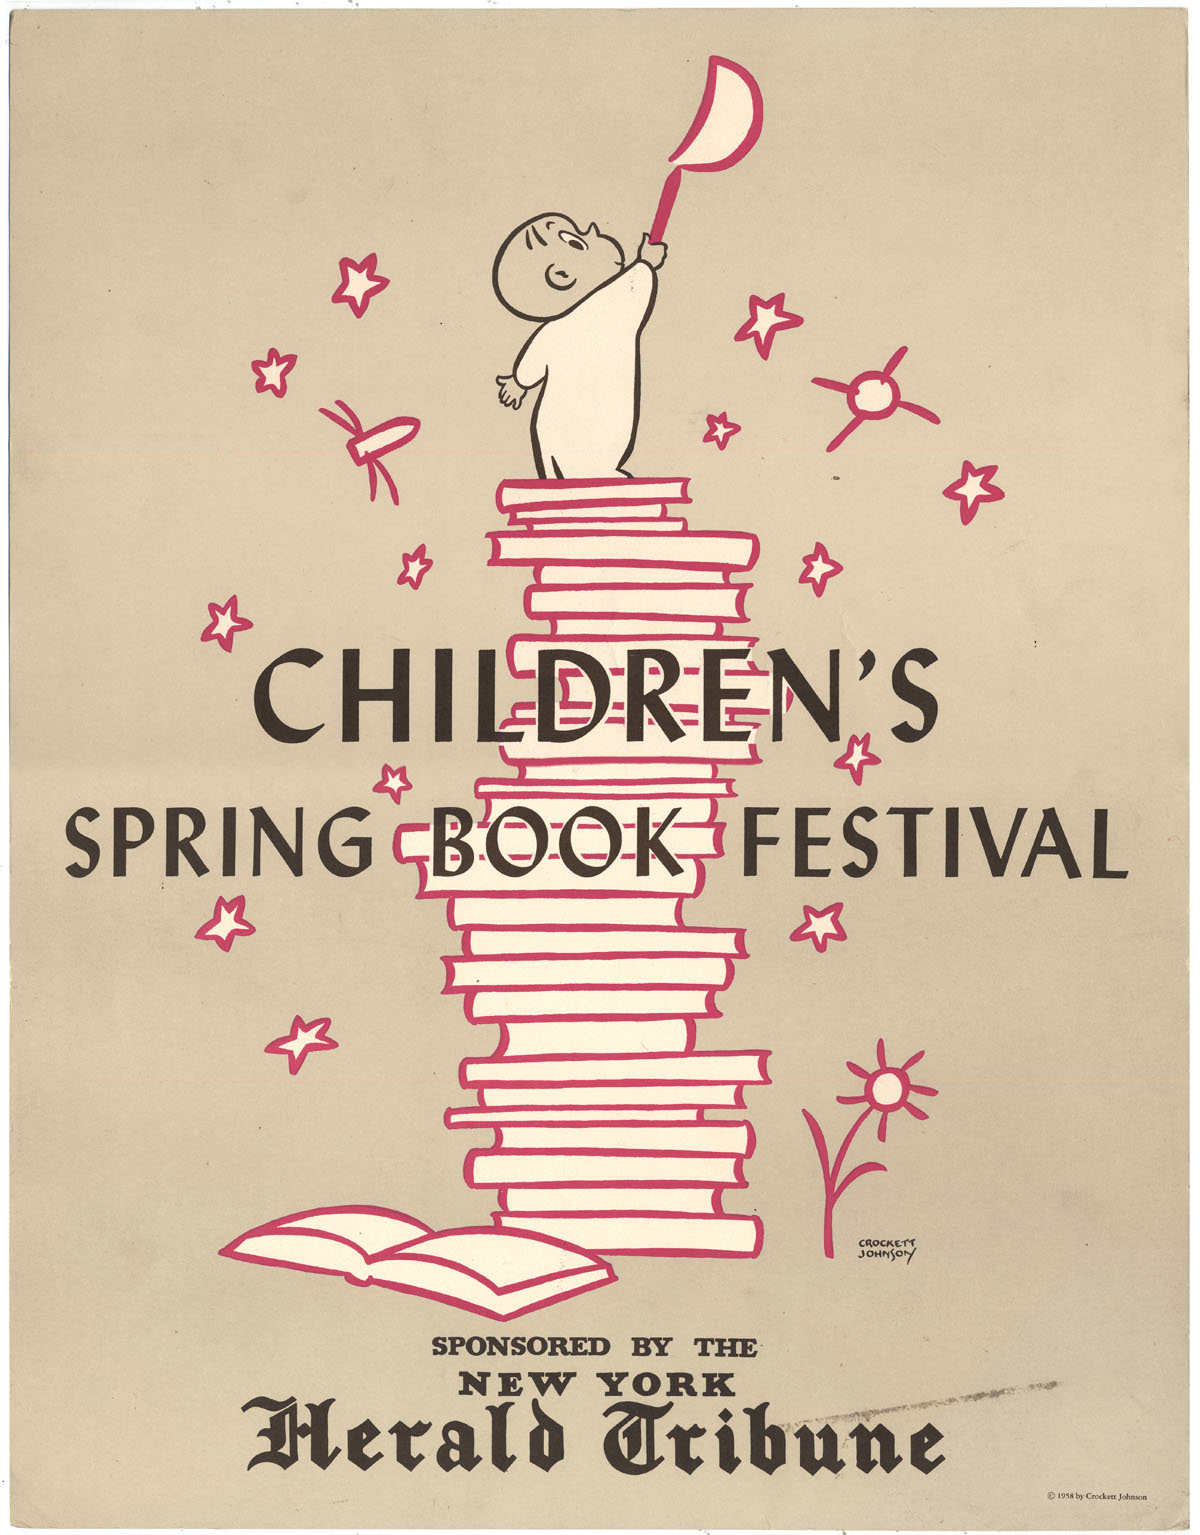 Crockett Johson: Herald Tribune Children's Spring Book Festival, 1958